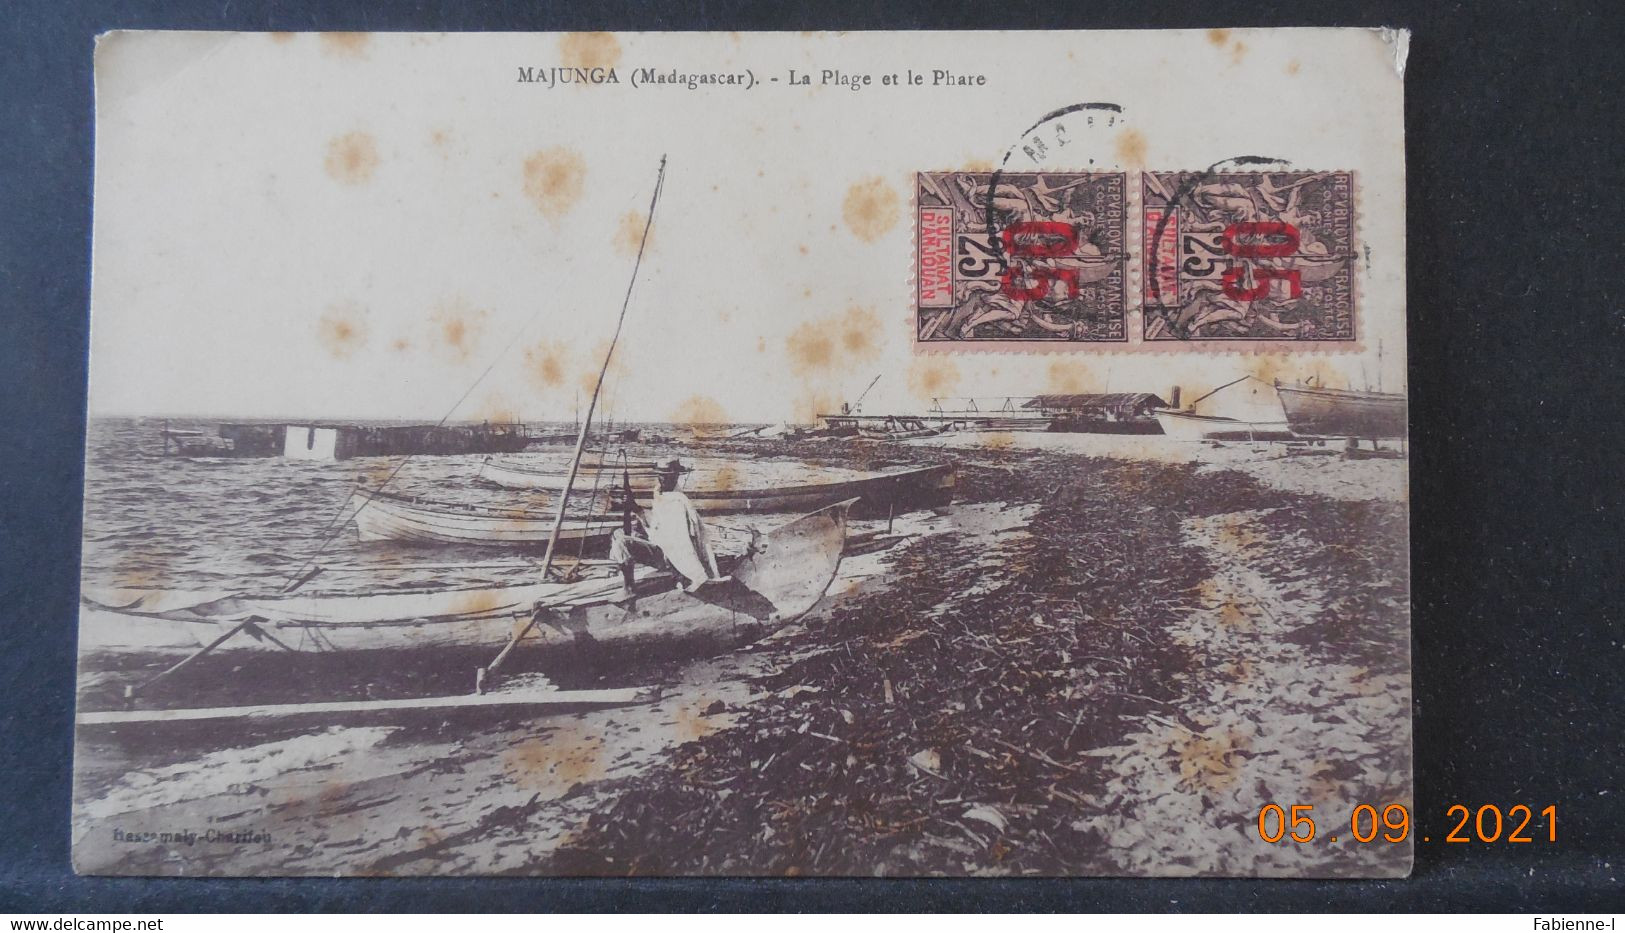 Carte Postale De 1914  à Destination De France Avec Timbre D'Anjouan Et Cachet De Madagascar - Briefe U. Dokumente